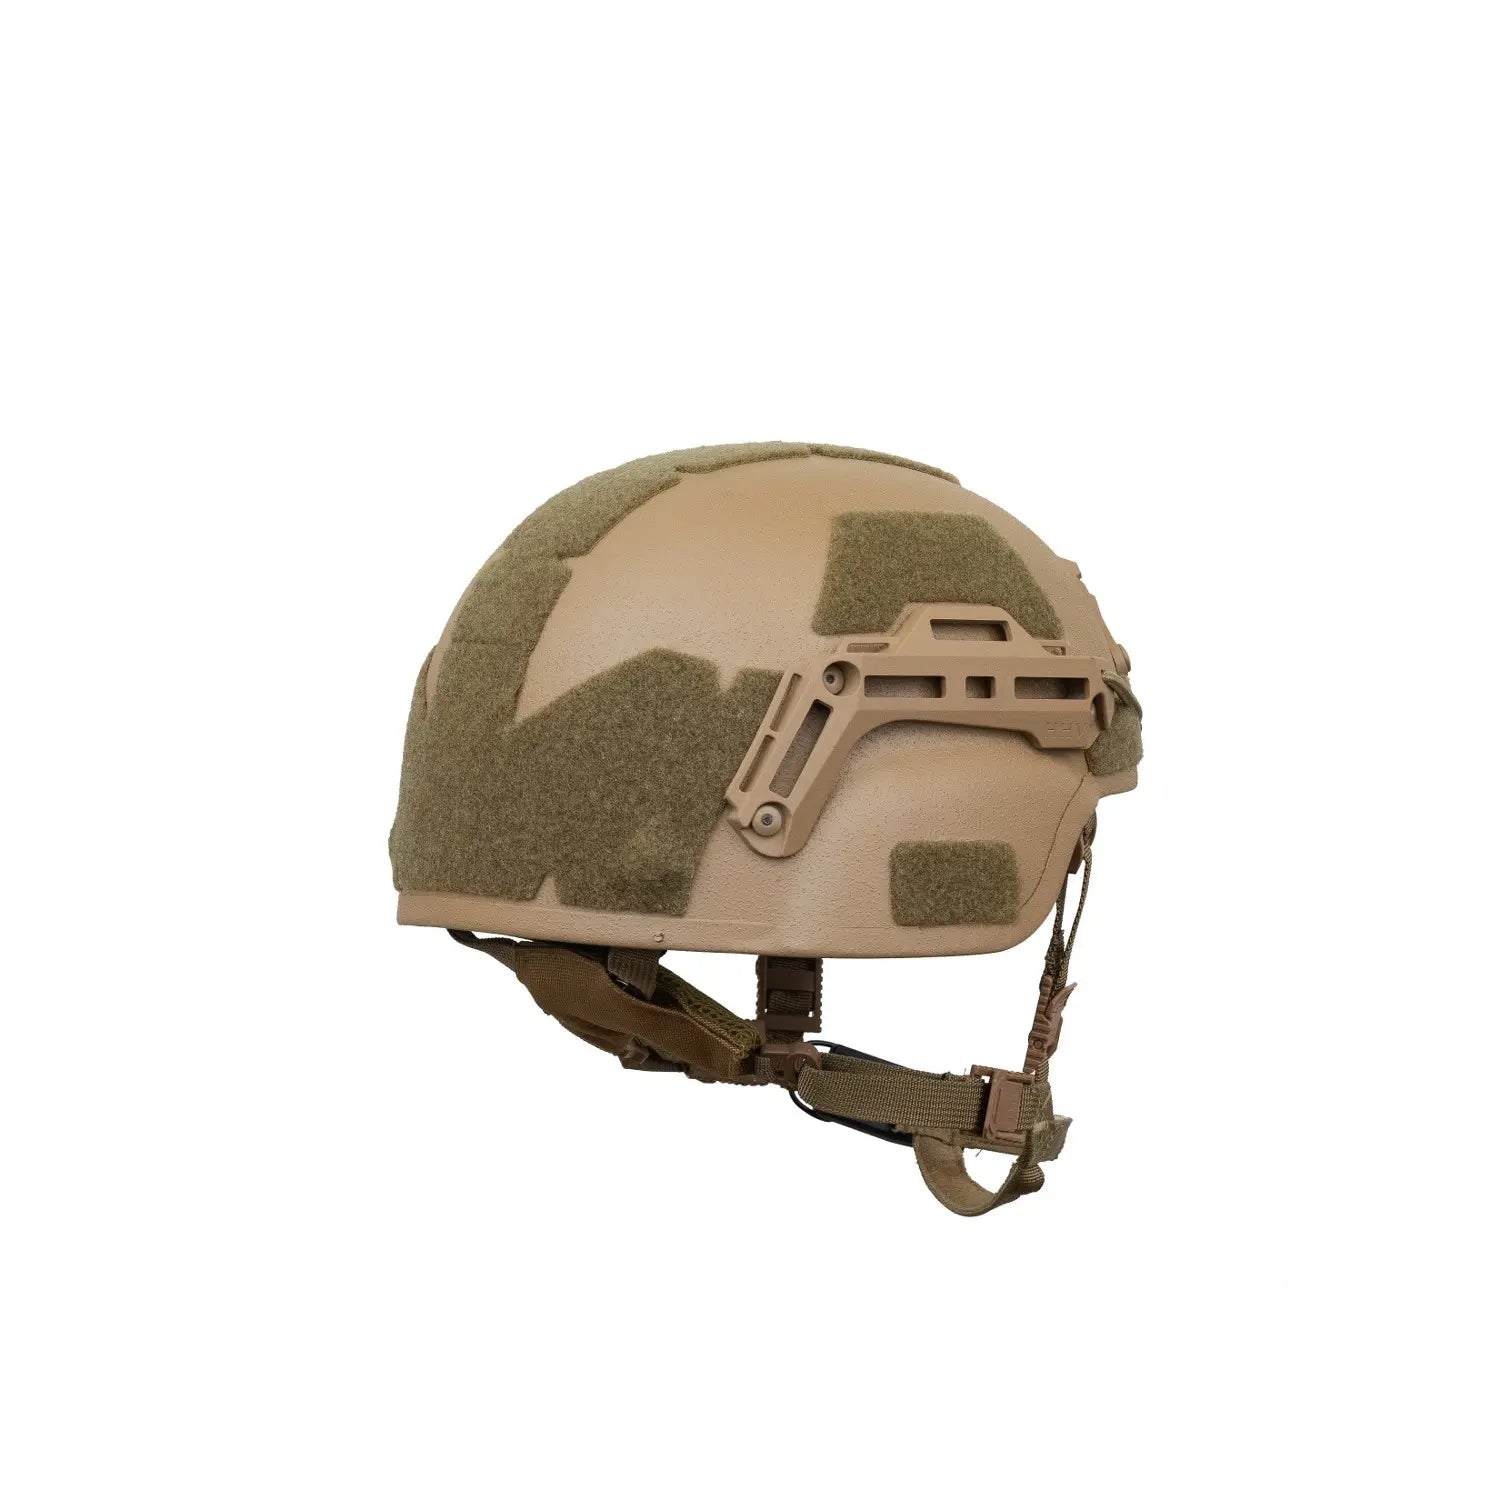 Hard Head Veterans Microlattice Tactical Helmet Pads | Fits mich, Ach, Fast, ate & Other Kevlar Helmets | Military Helmet Ballistic Liner Upgrade